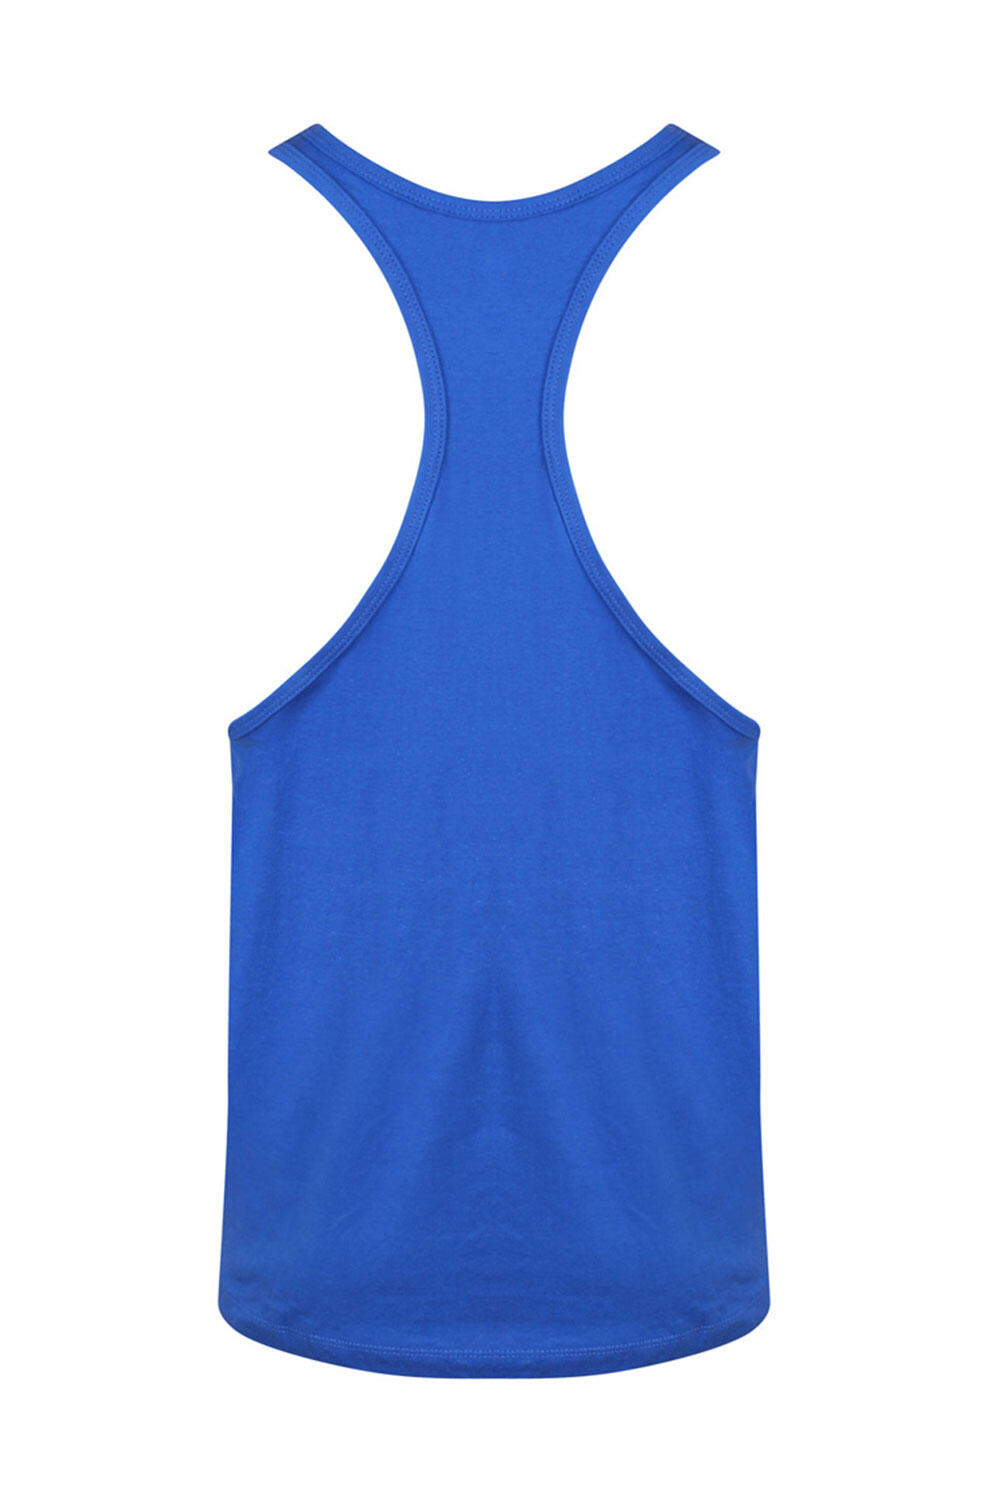 Men's Gold's Gym Muscle Joe Print Premium Stringer Vest 3/4